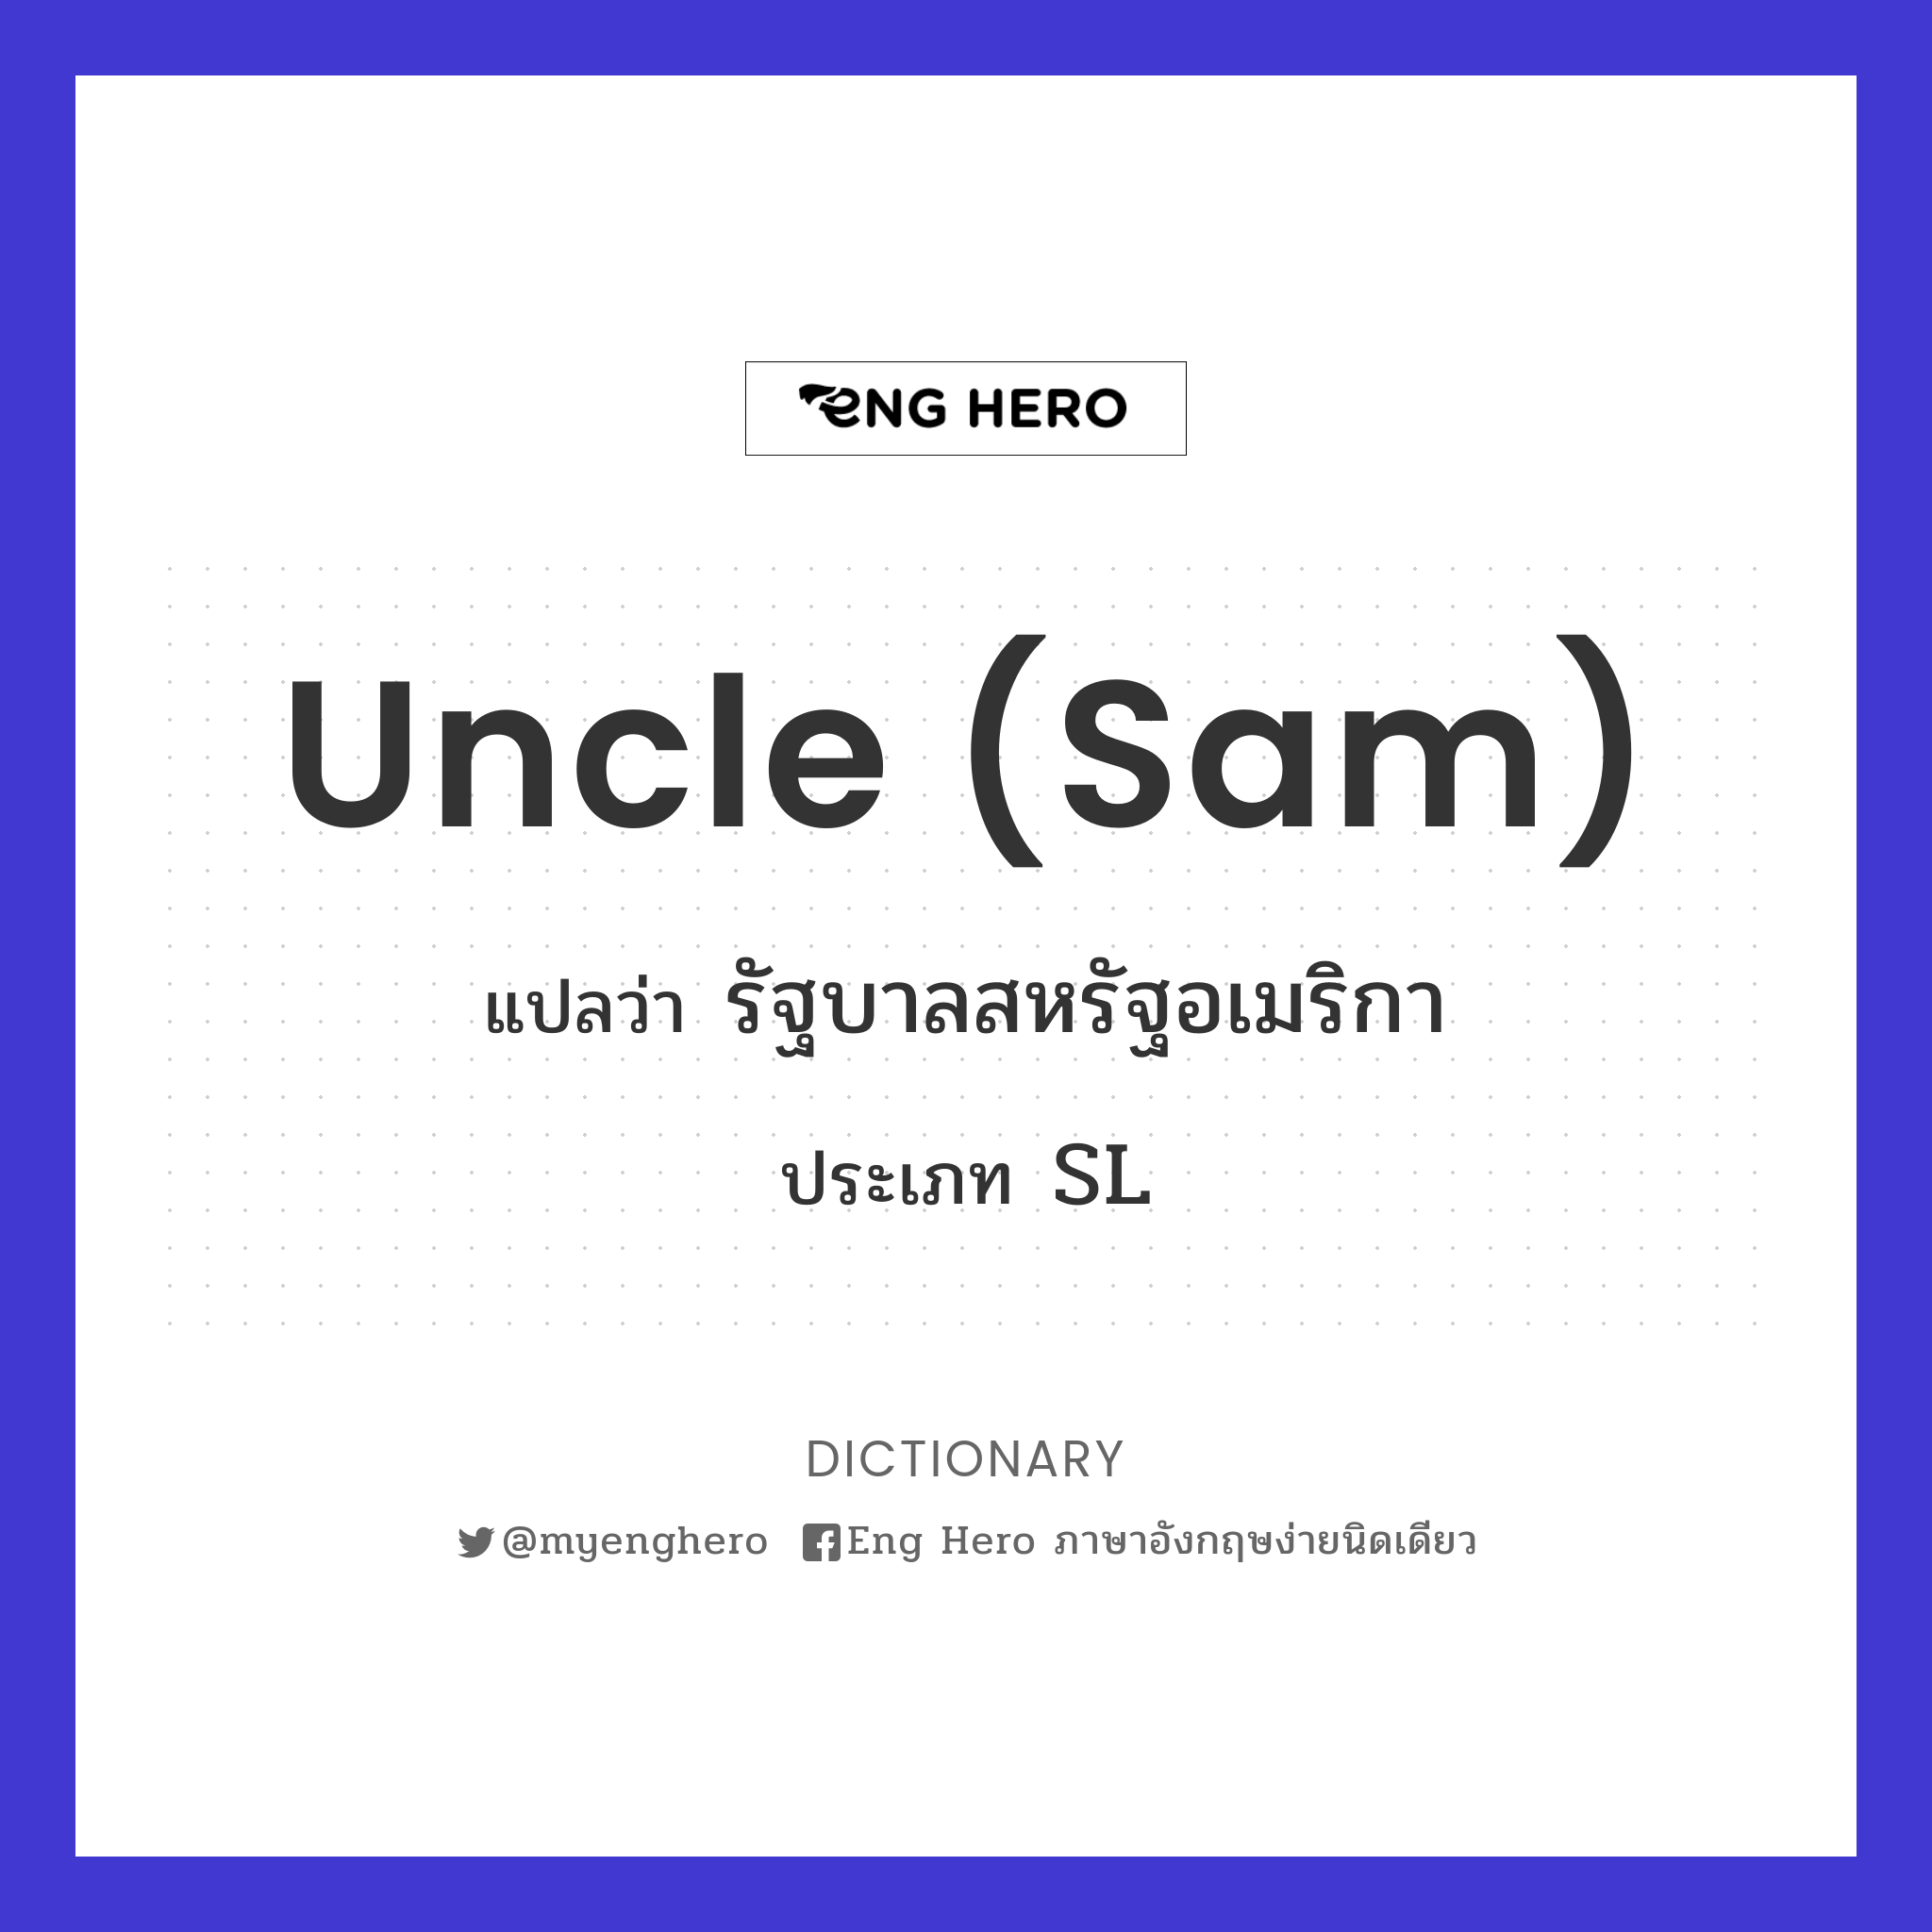 Uncle (Sam)